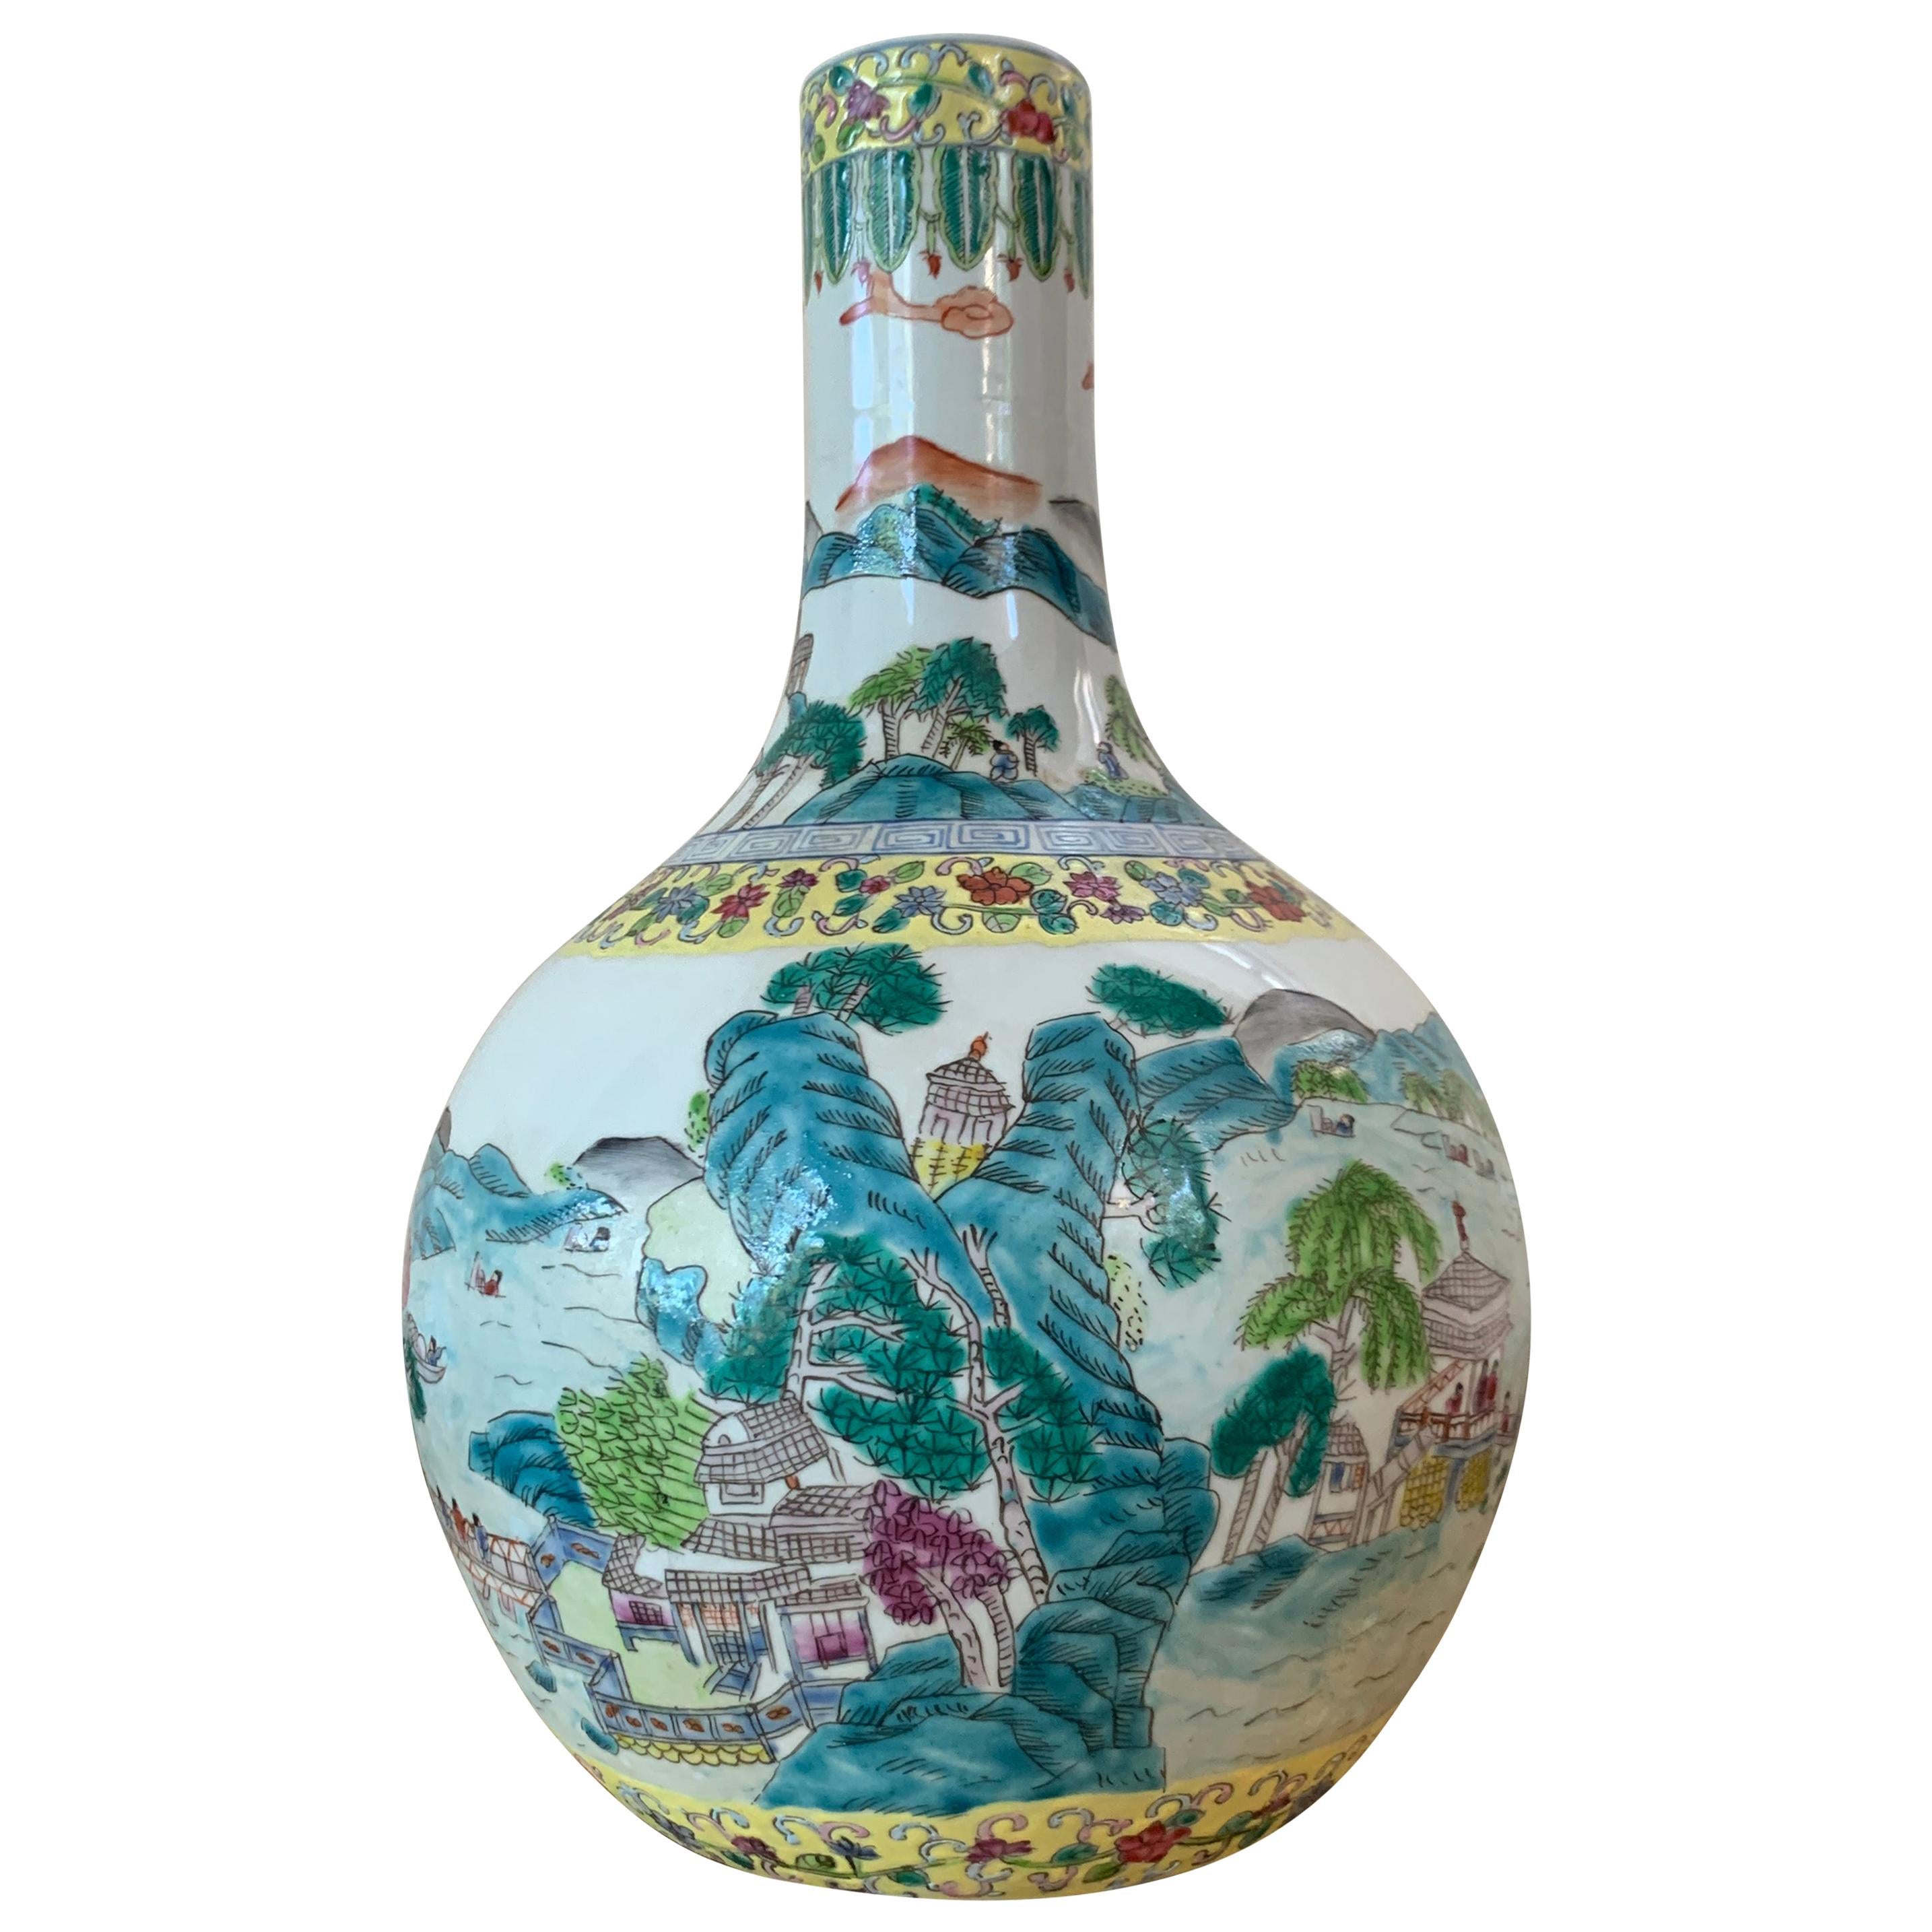 Große Tianqiuping- oder Globus-Cloisonné-Vase aus dem frühen 20. Jahrhundert